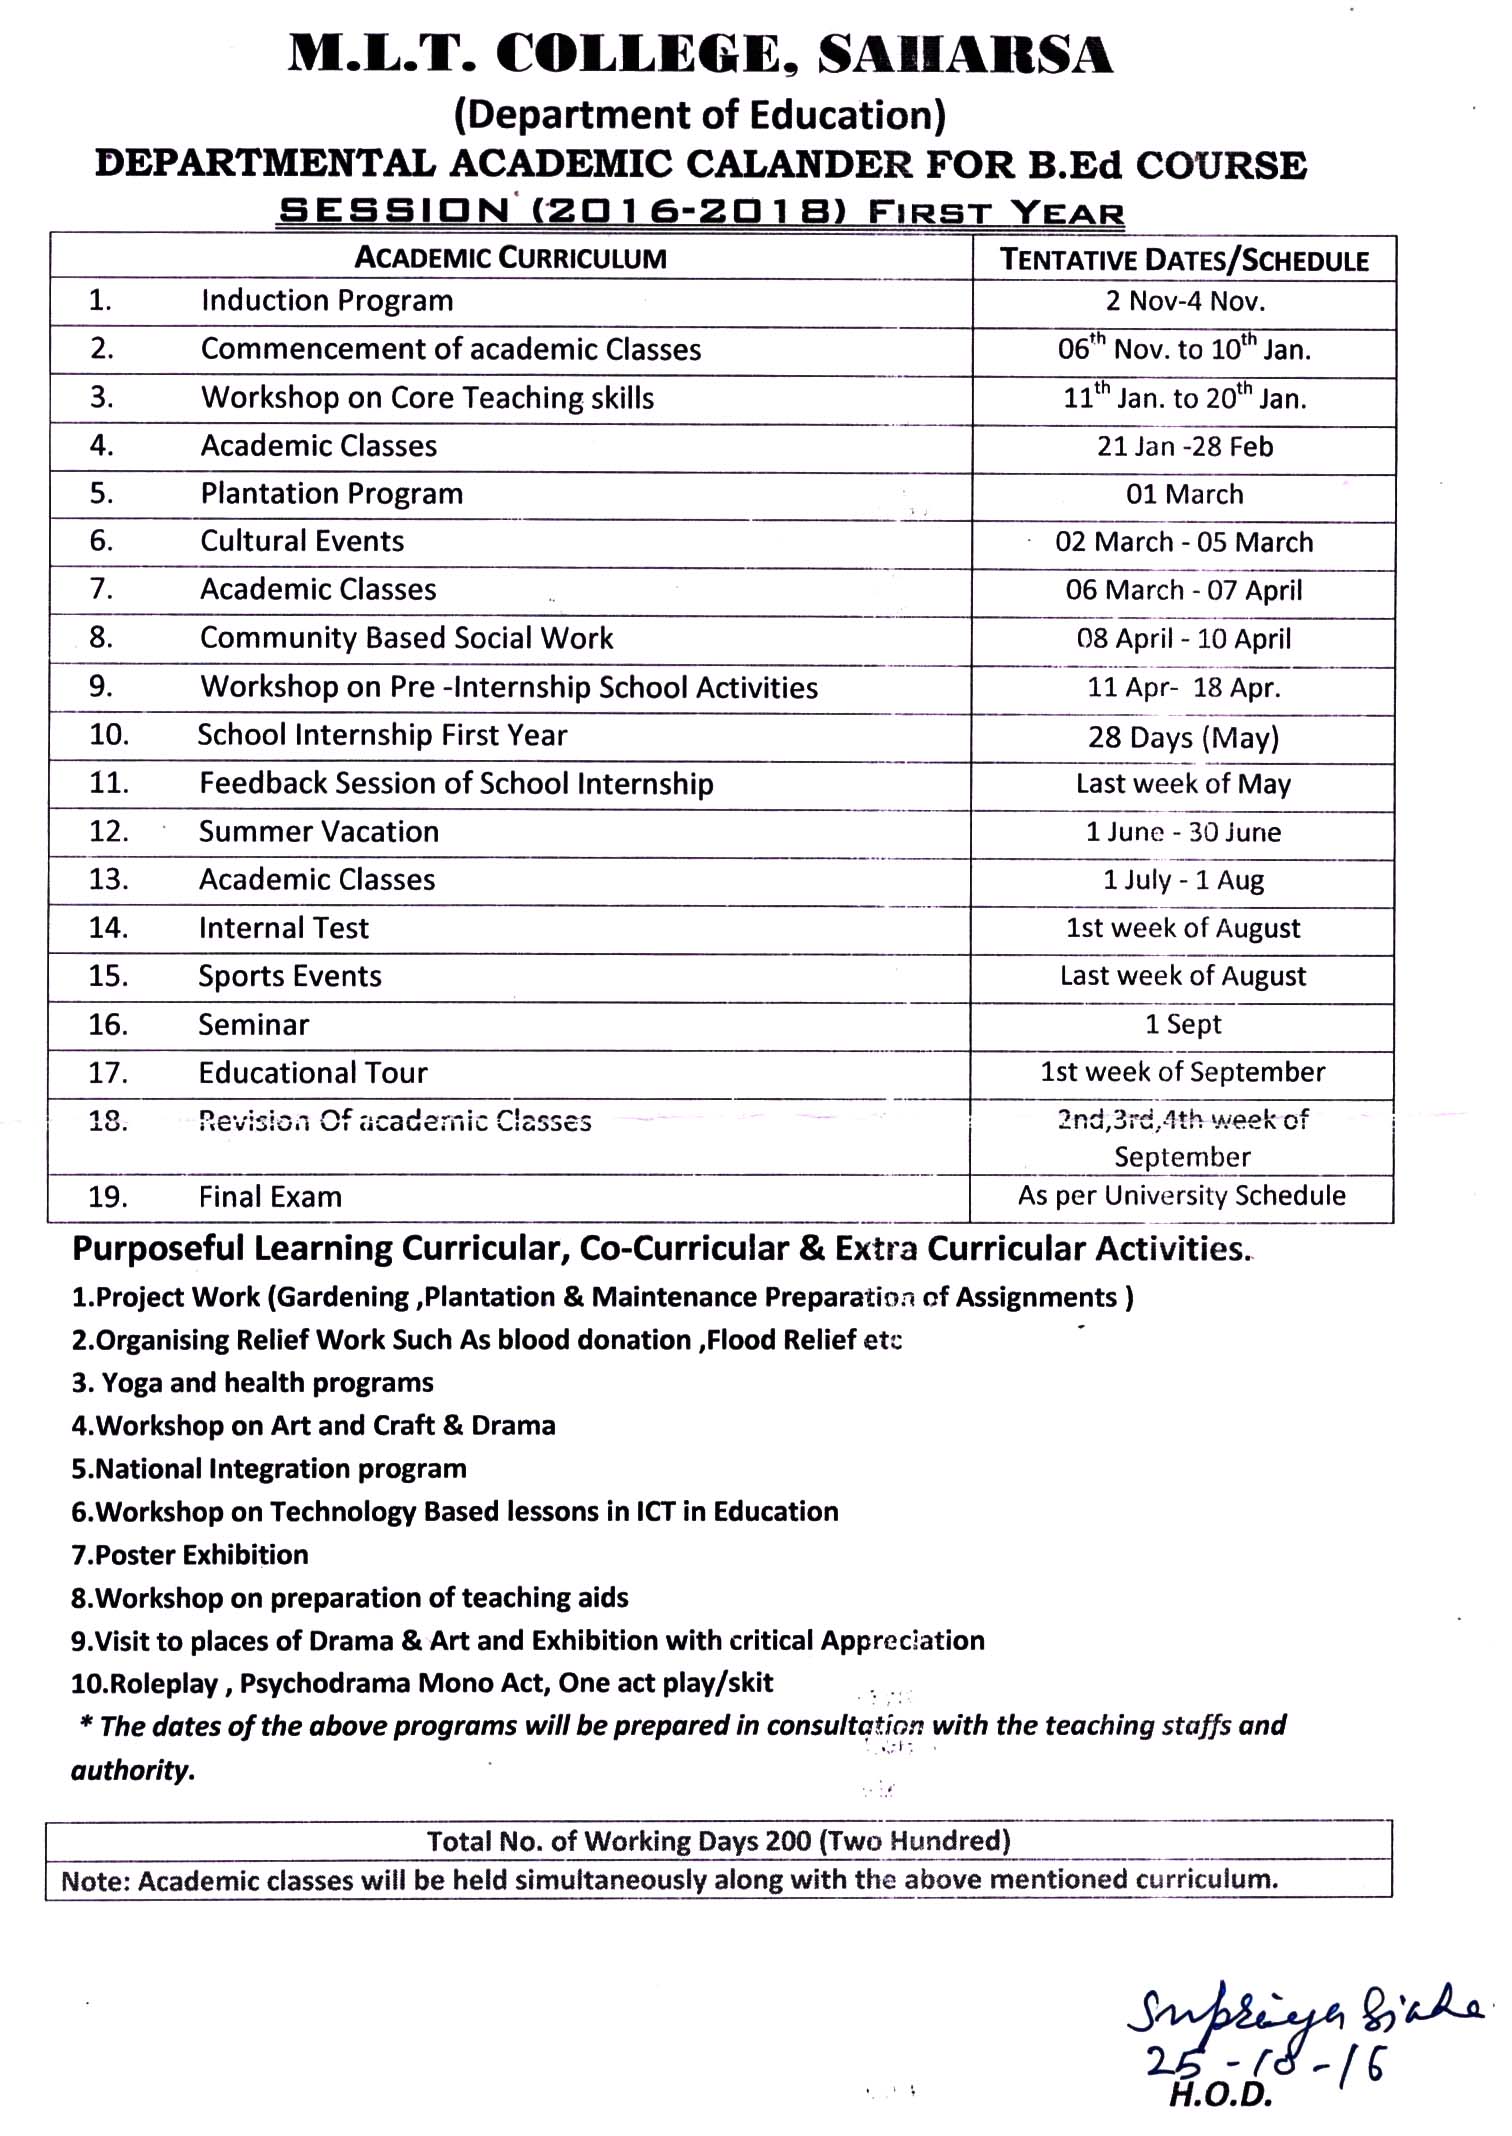 Academic Calendar MLT College B.Ed. Department Website